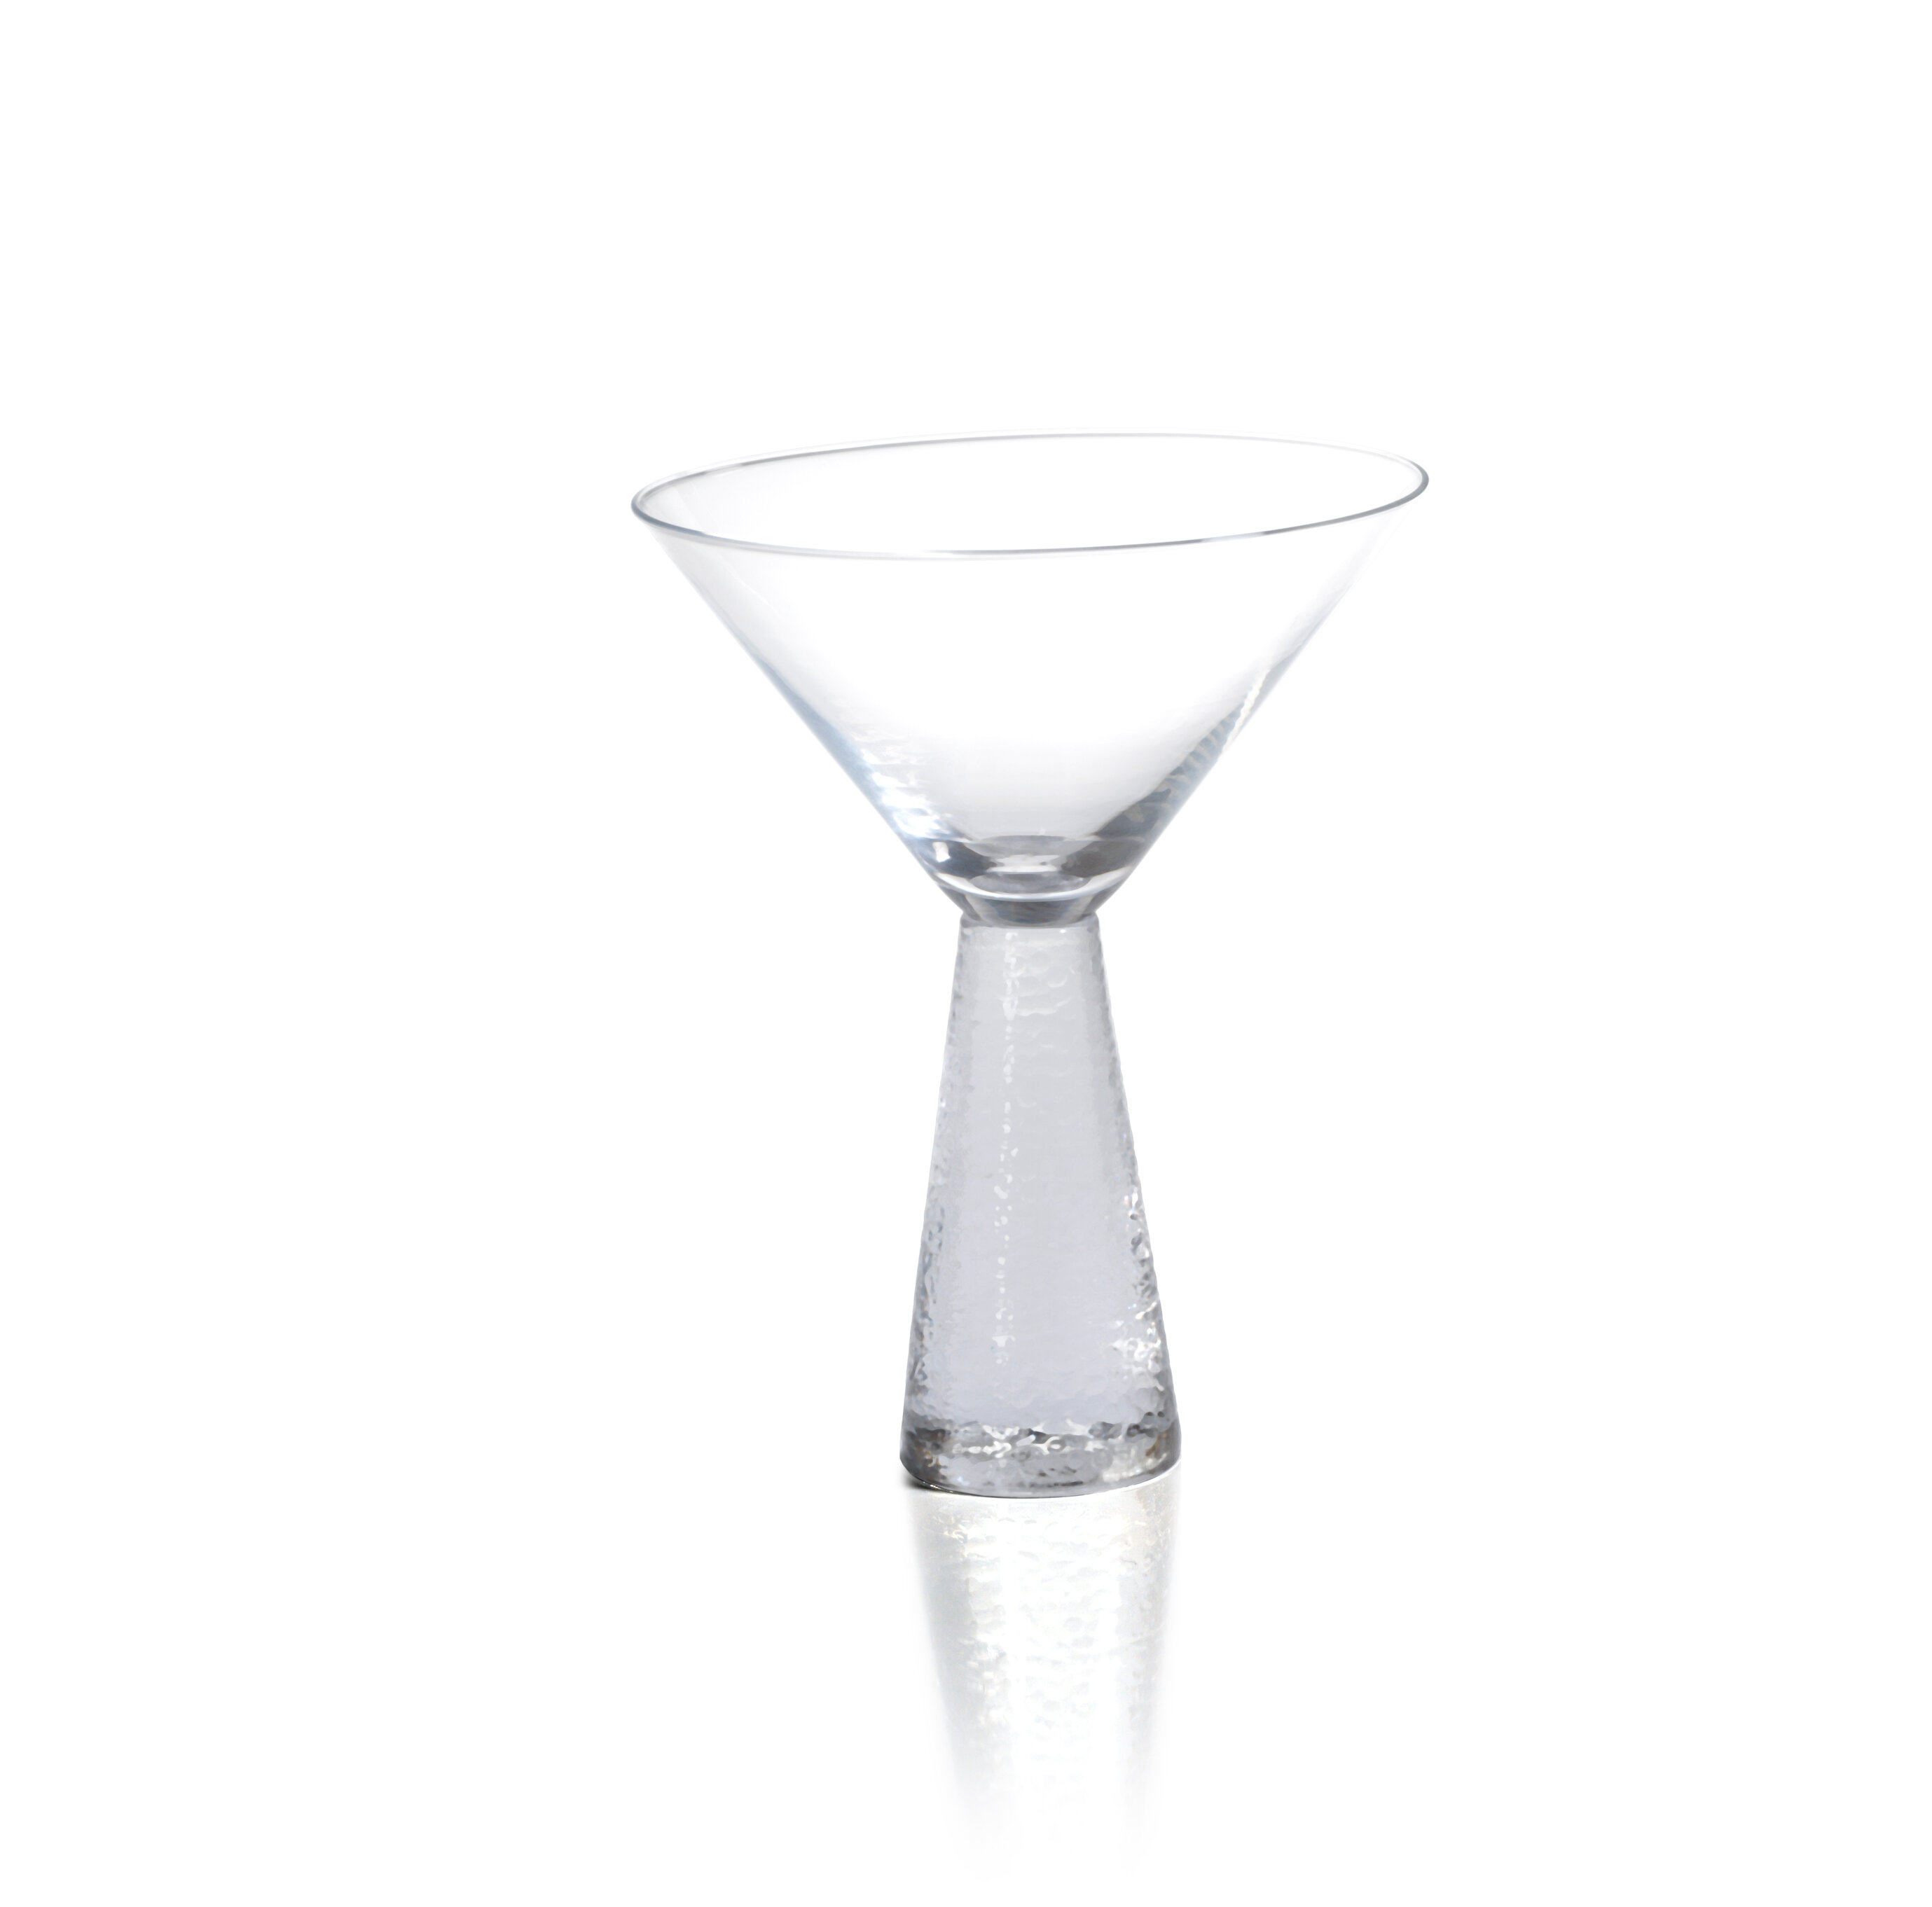 3.5 oz Mini Square Martini Taster Glass